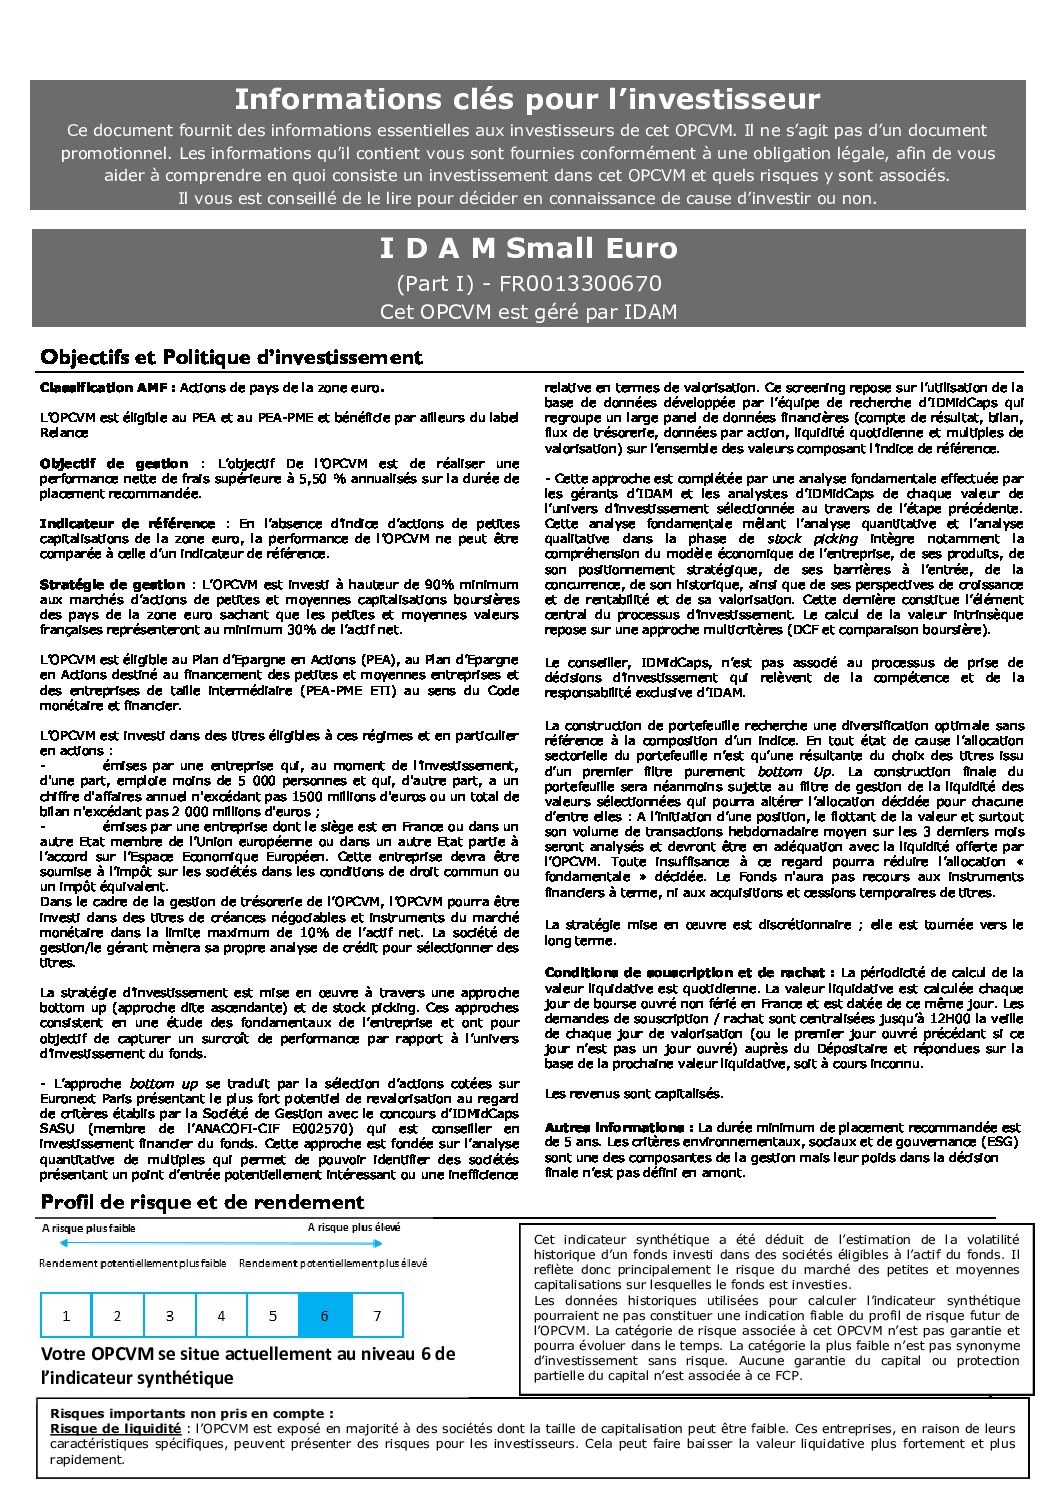 DICI-Part-I-IDAM-SMALL-EURO 2021 03 31-pdf